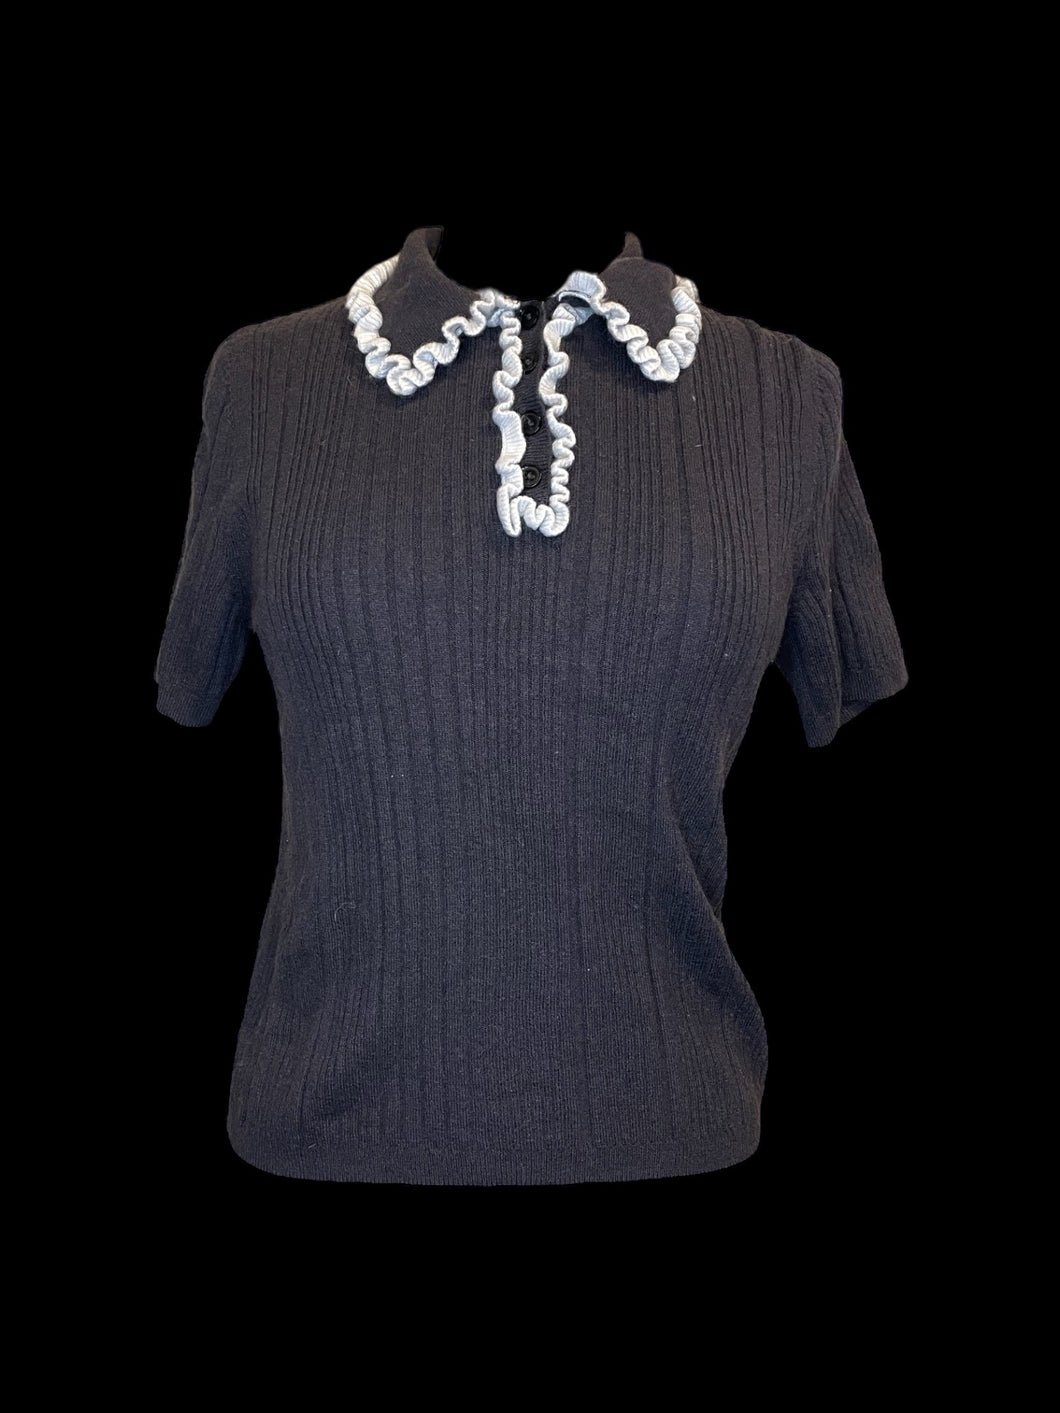 XL Slate grey & white wool blend knit short sleeve polo-style sweater w/ ruffle details